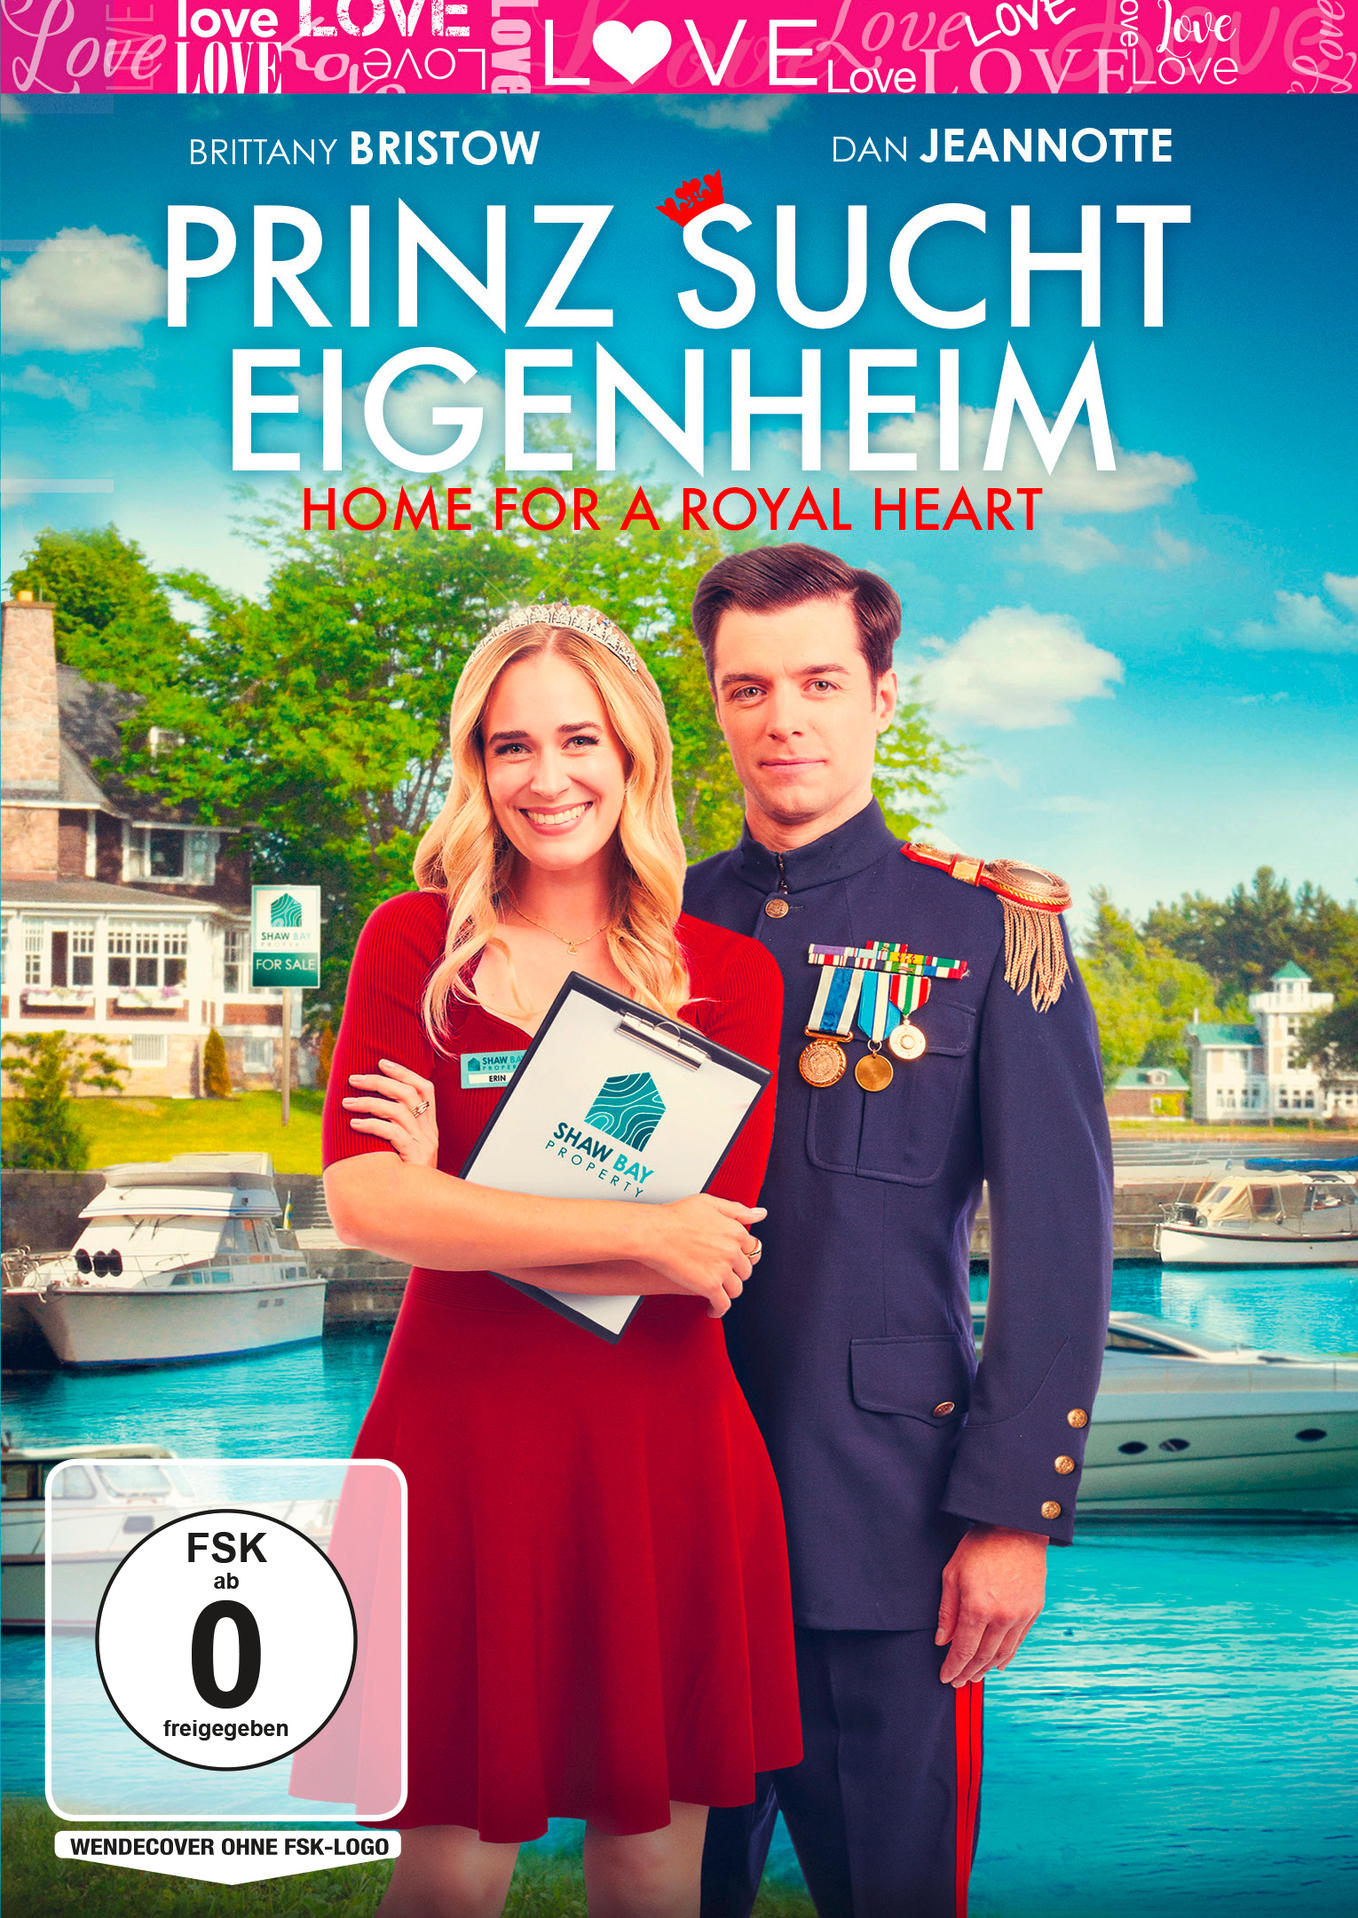 Prinz sucht Eigenheim - a Home Royal DVD for Heart